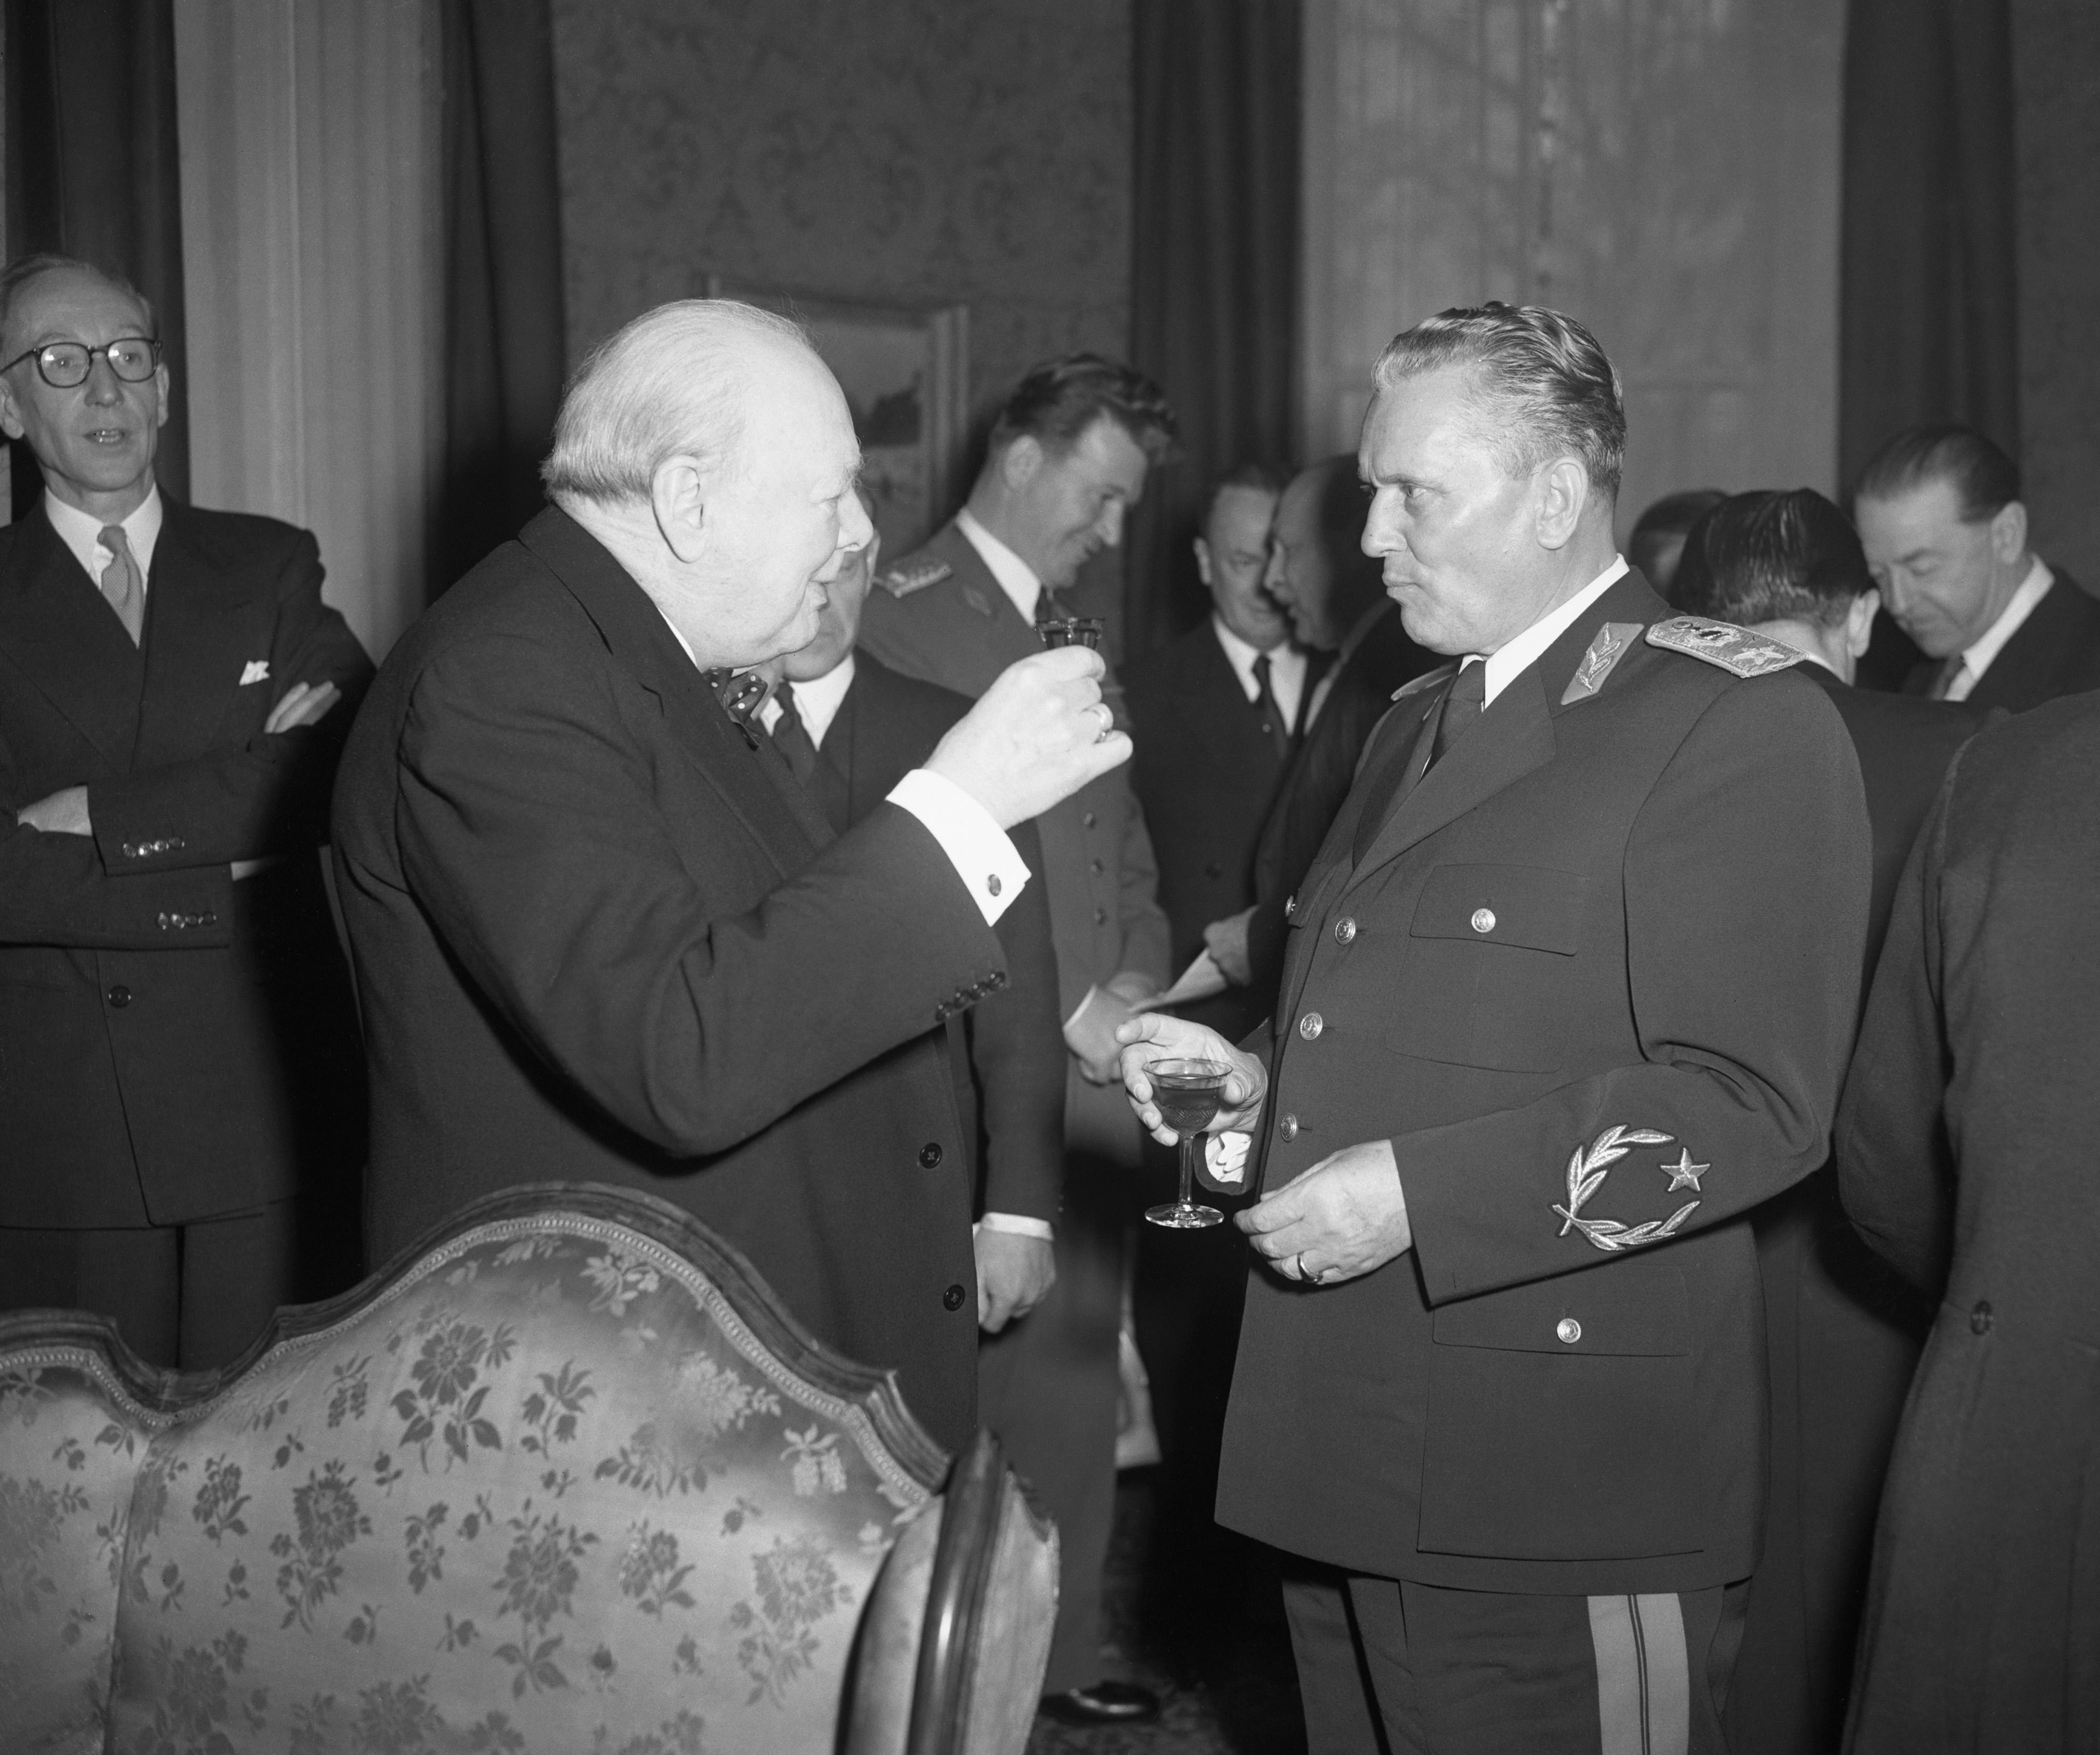 Winston Churchill raises a glass to toast Marshal Tito at the Yugoslav embassy in Kensington 1953